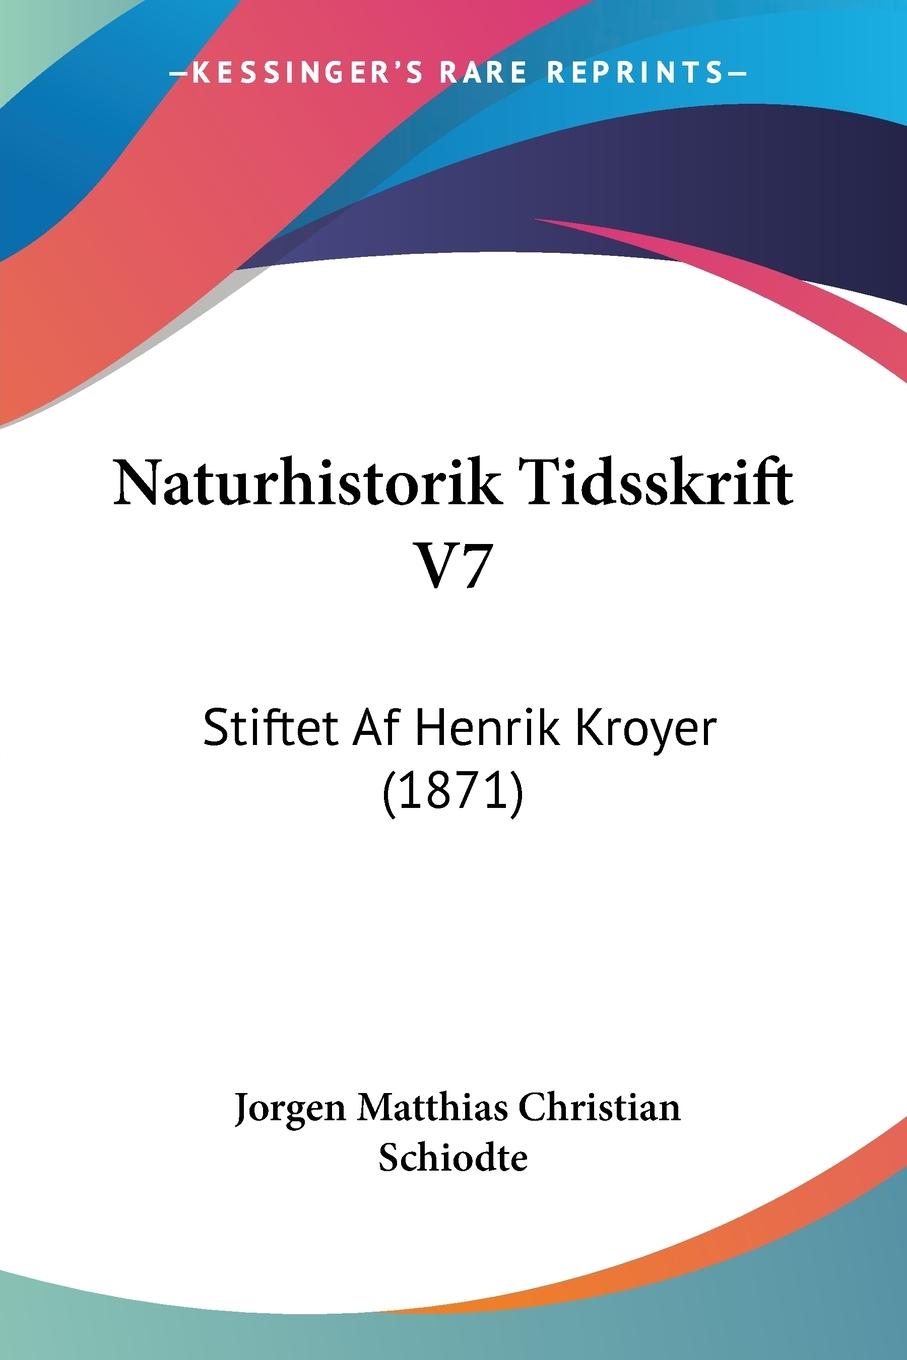 Naturhistorik Tidsskrift V7 - Schiodte, Jorgen Matthias Christian